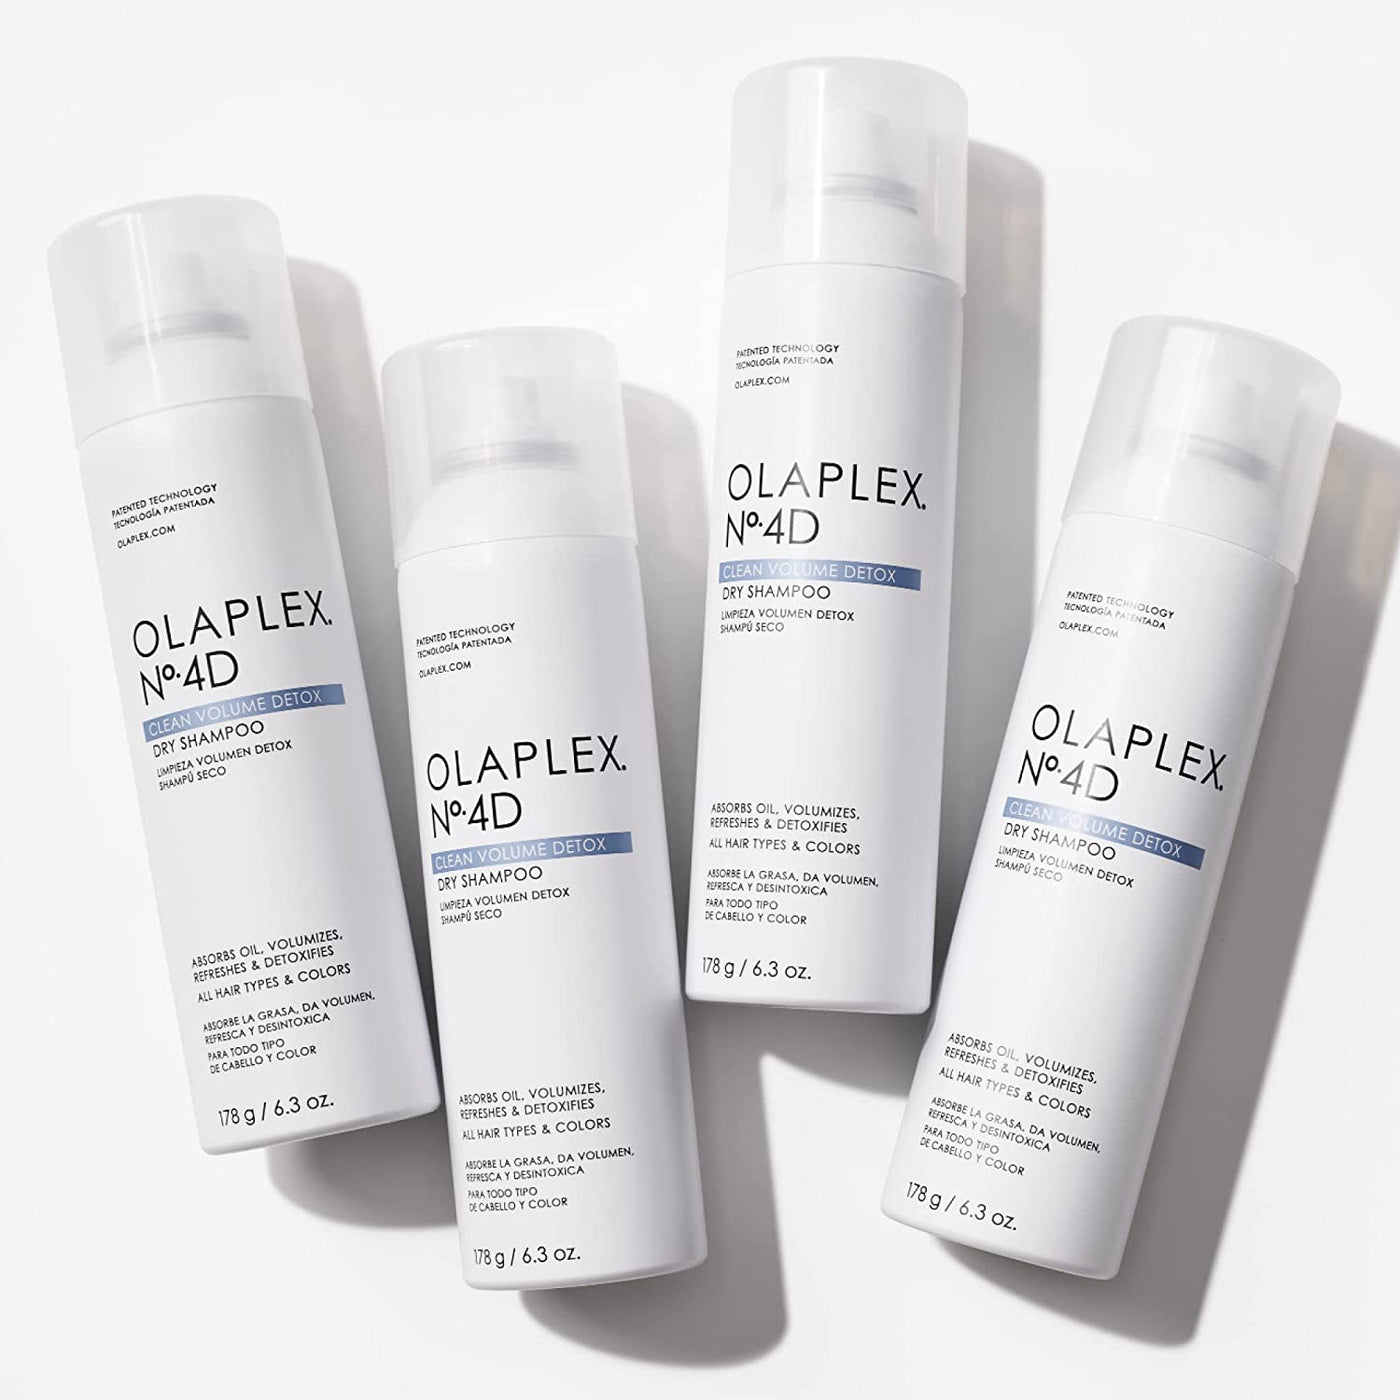 Olaplex No. 4D Clean Volume Detox Dry Shampoo - A Cosmetologist Exclusive!